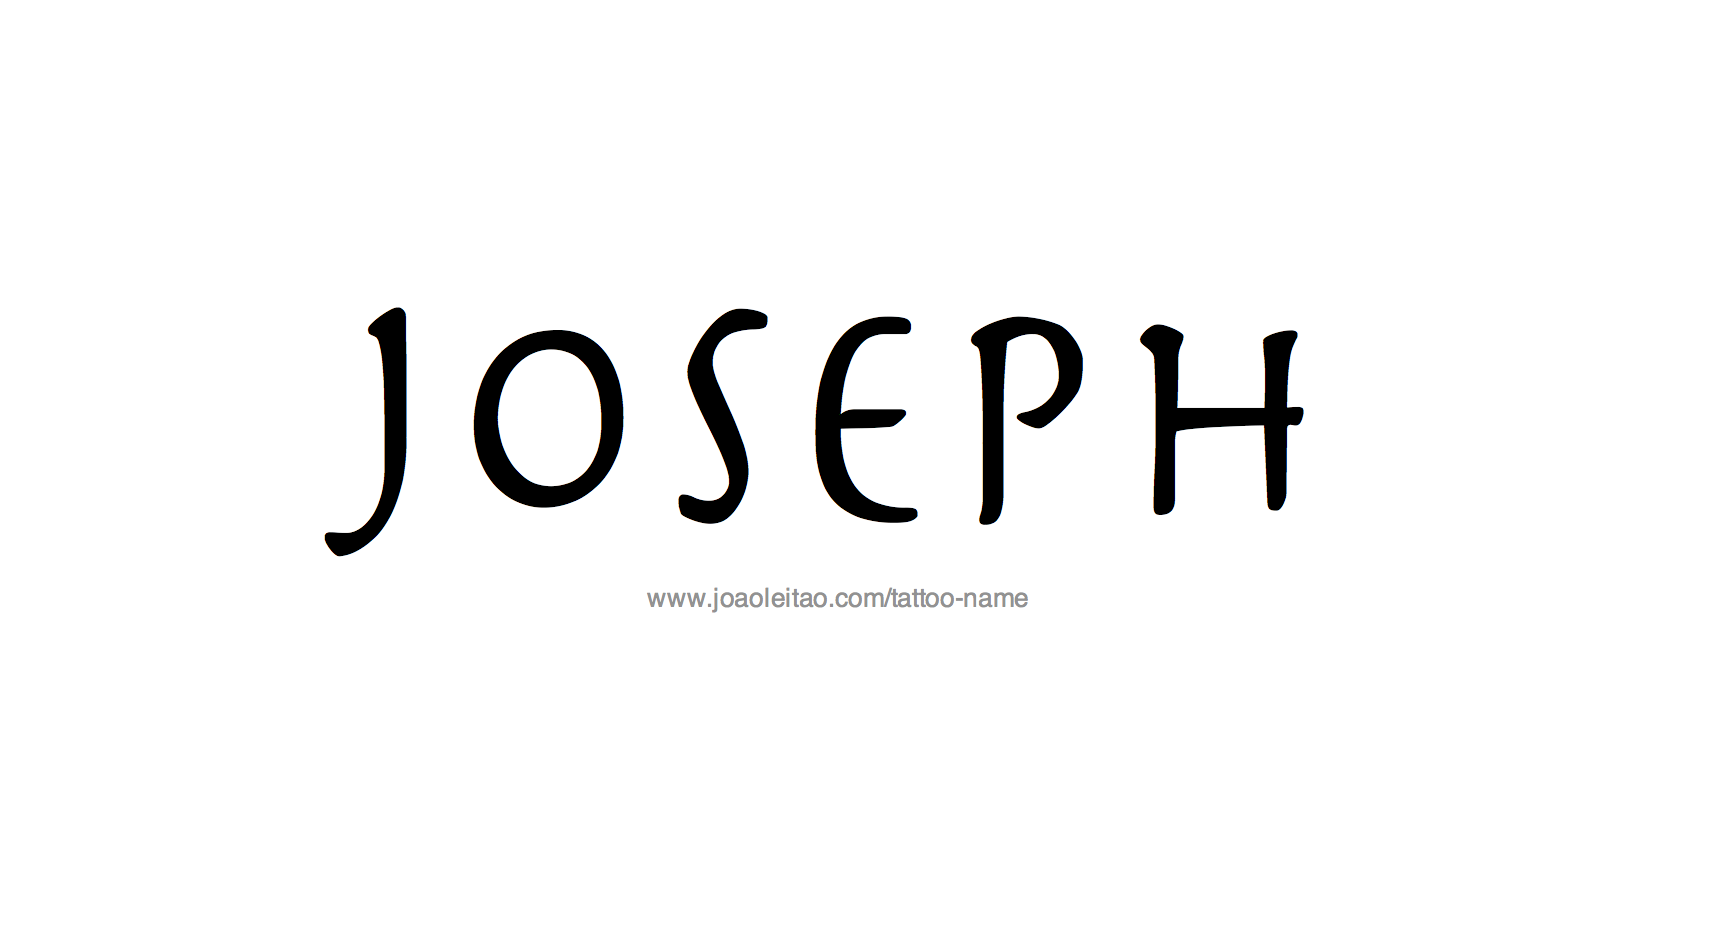 Tattoo Design Name Joseph